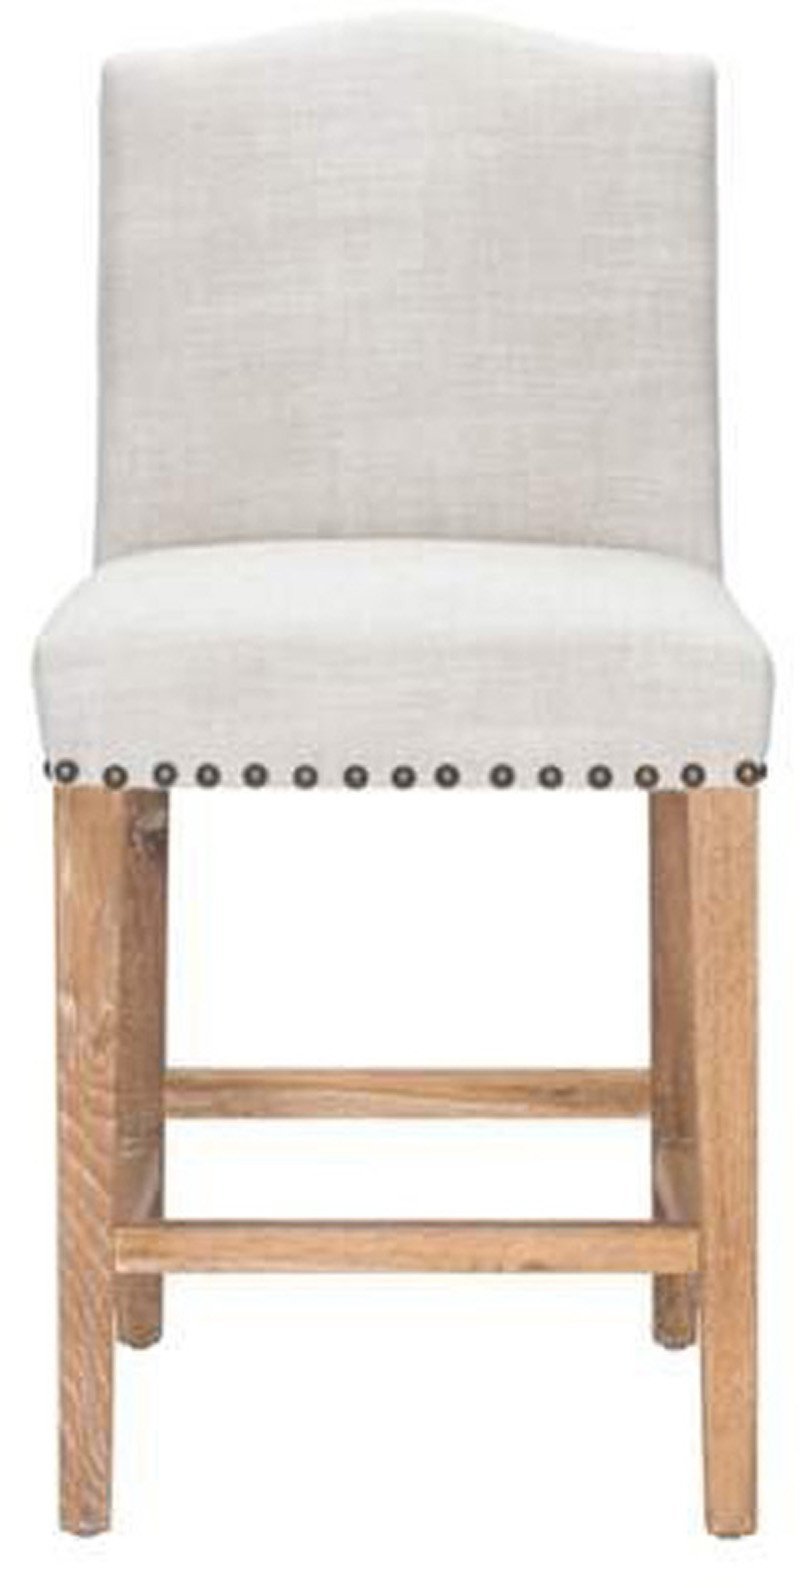 Zuo Modern 98601 Pasadena Counter Chair Color Beige Oak Wood Finish